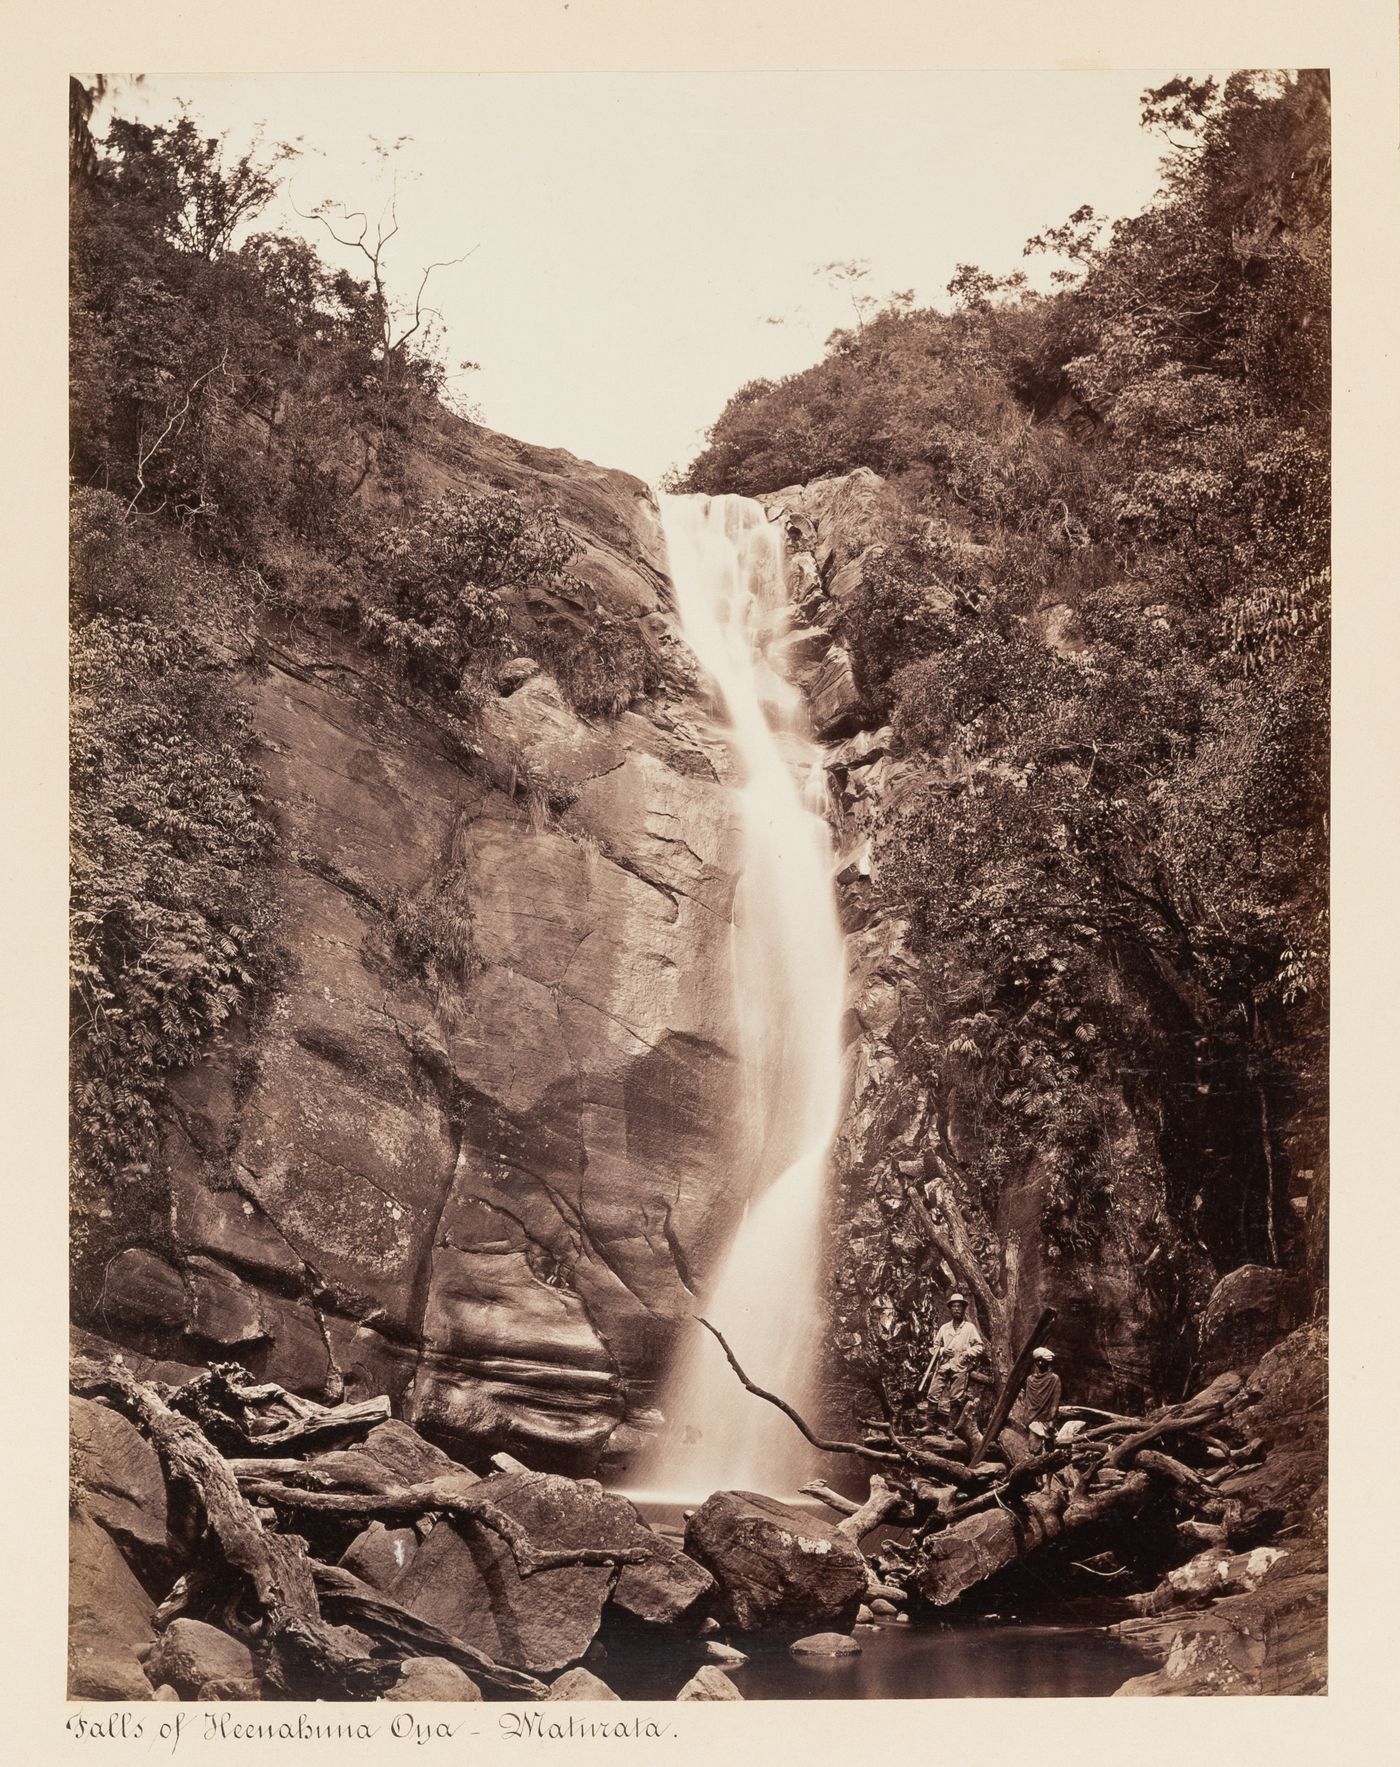 View of Falls of Heenahuna Oya, Maturata, Ceylon (now Sri Lanka)